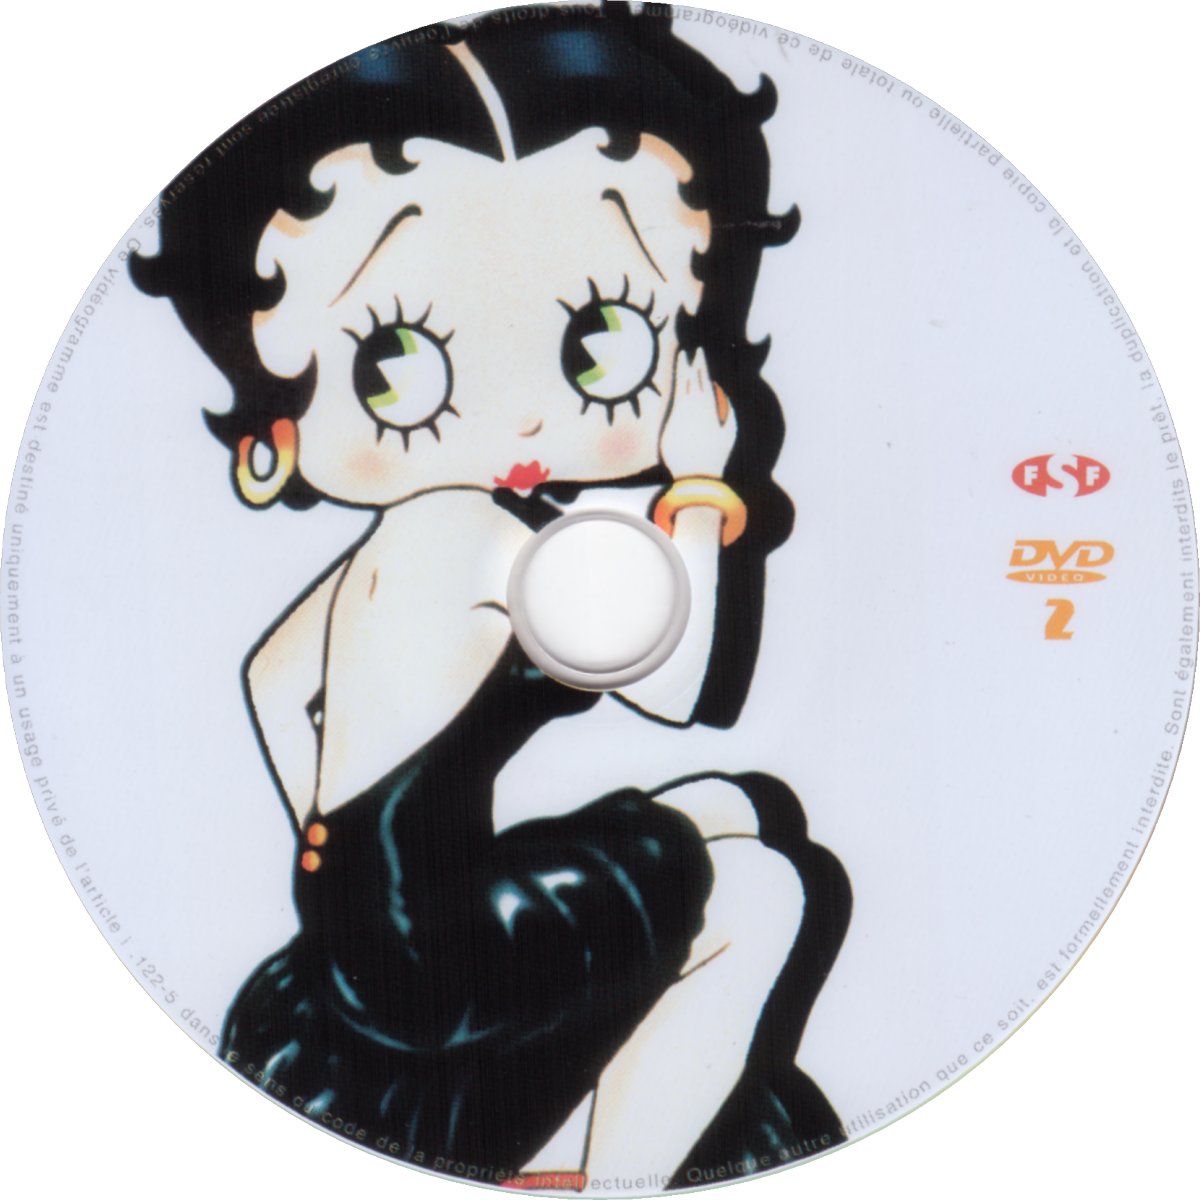 Betty Boop - DVD 2